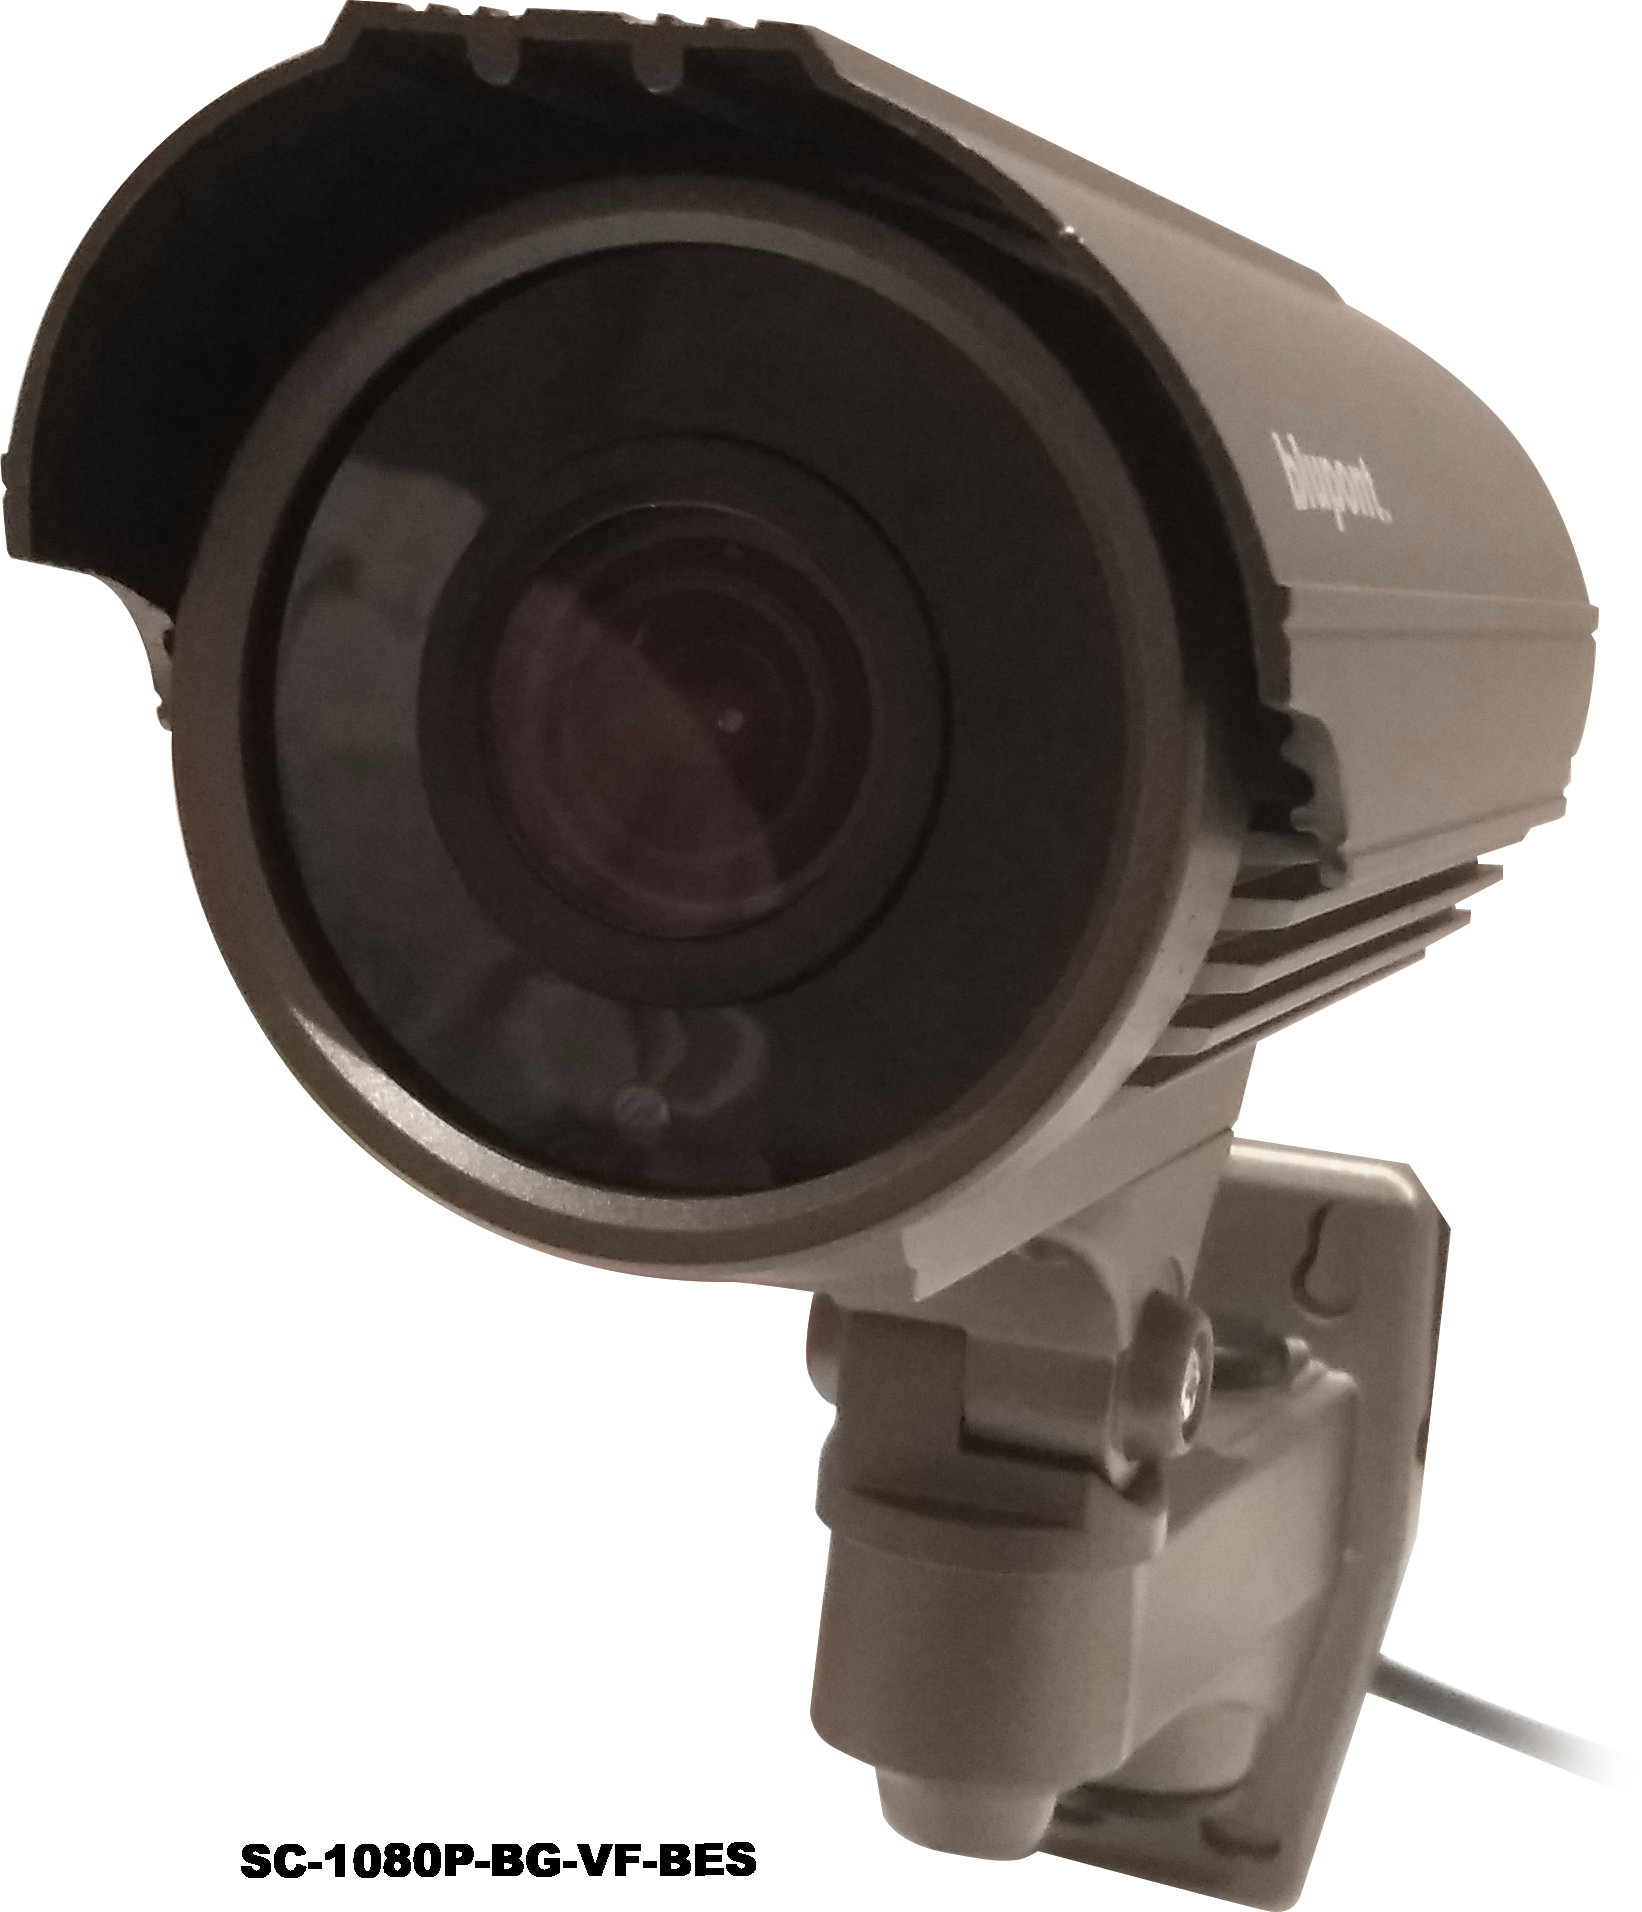 2.0MP 4in1 Grey Bullet CCTV Camera - Varifocal